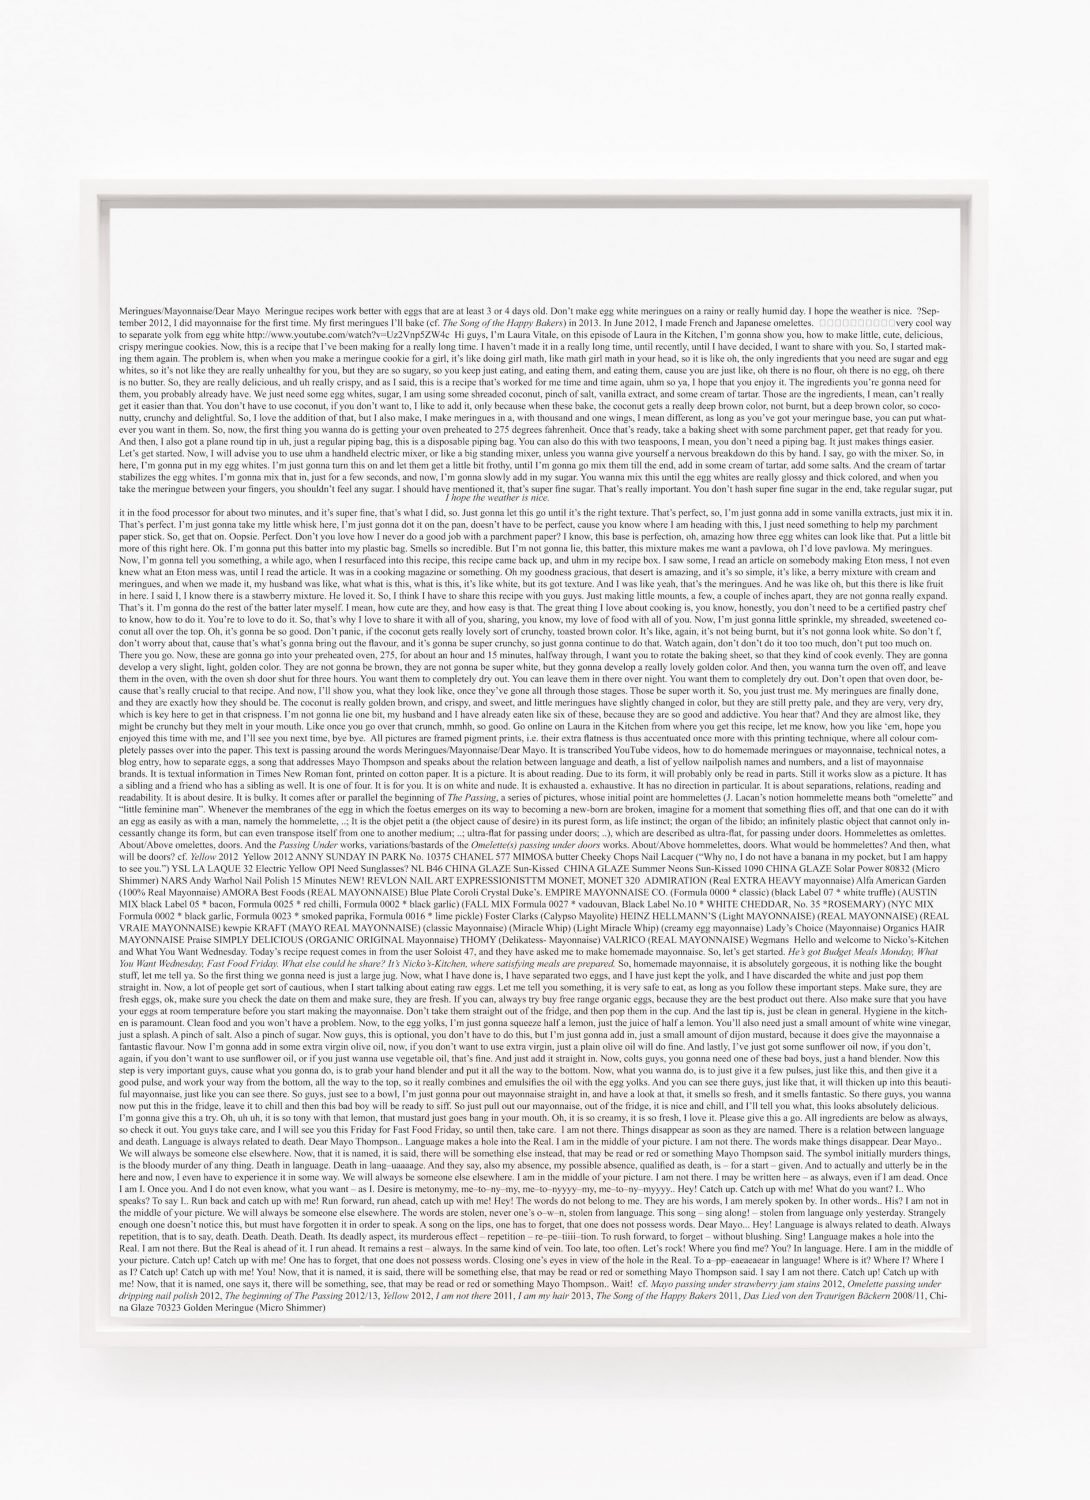 Lisa HolzerMeringues/Mayonnaise/Dear Mayo, 2013Pigment print on cotton paper88 x 68 cm